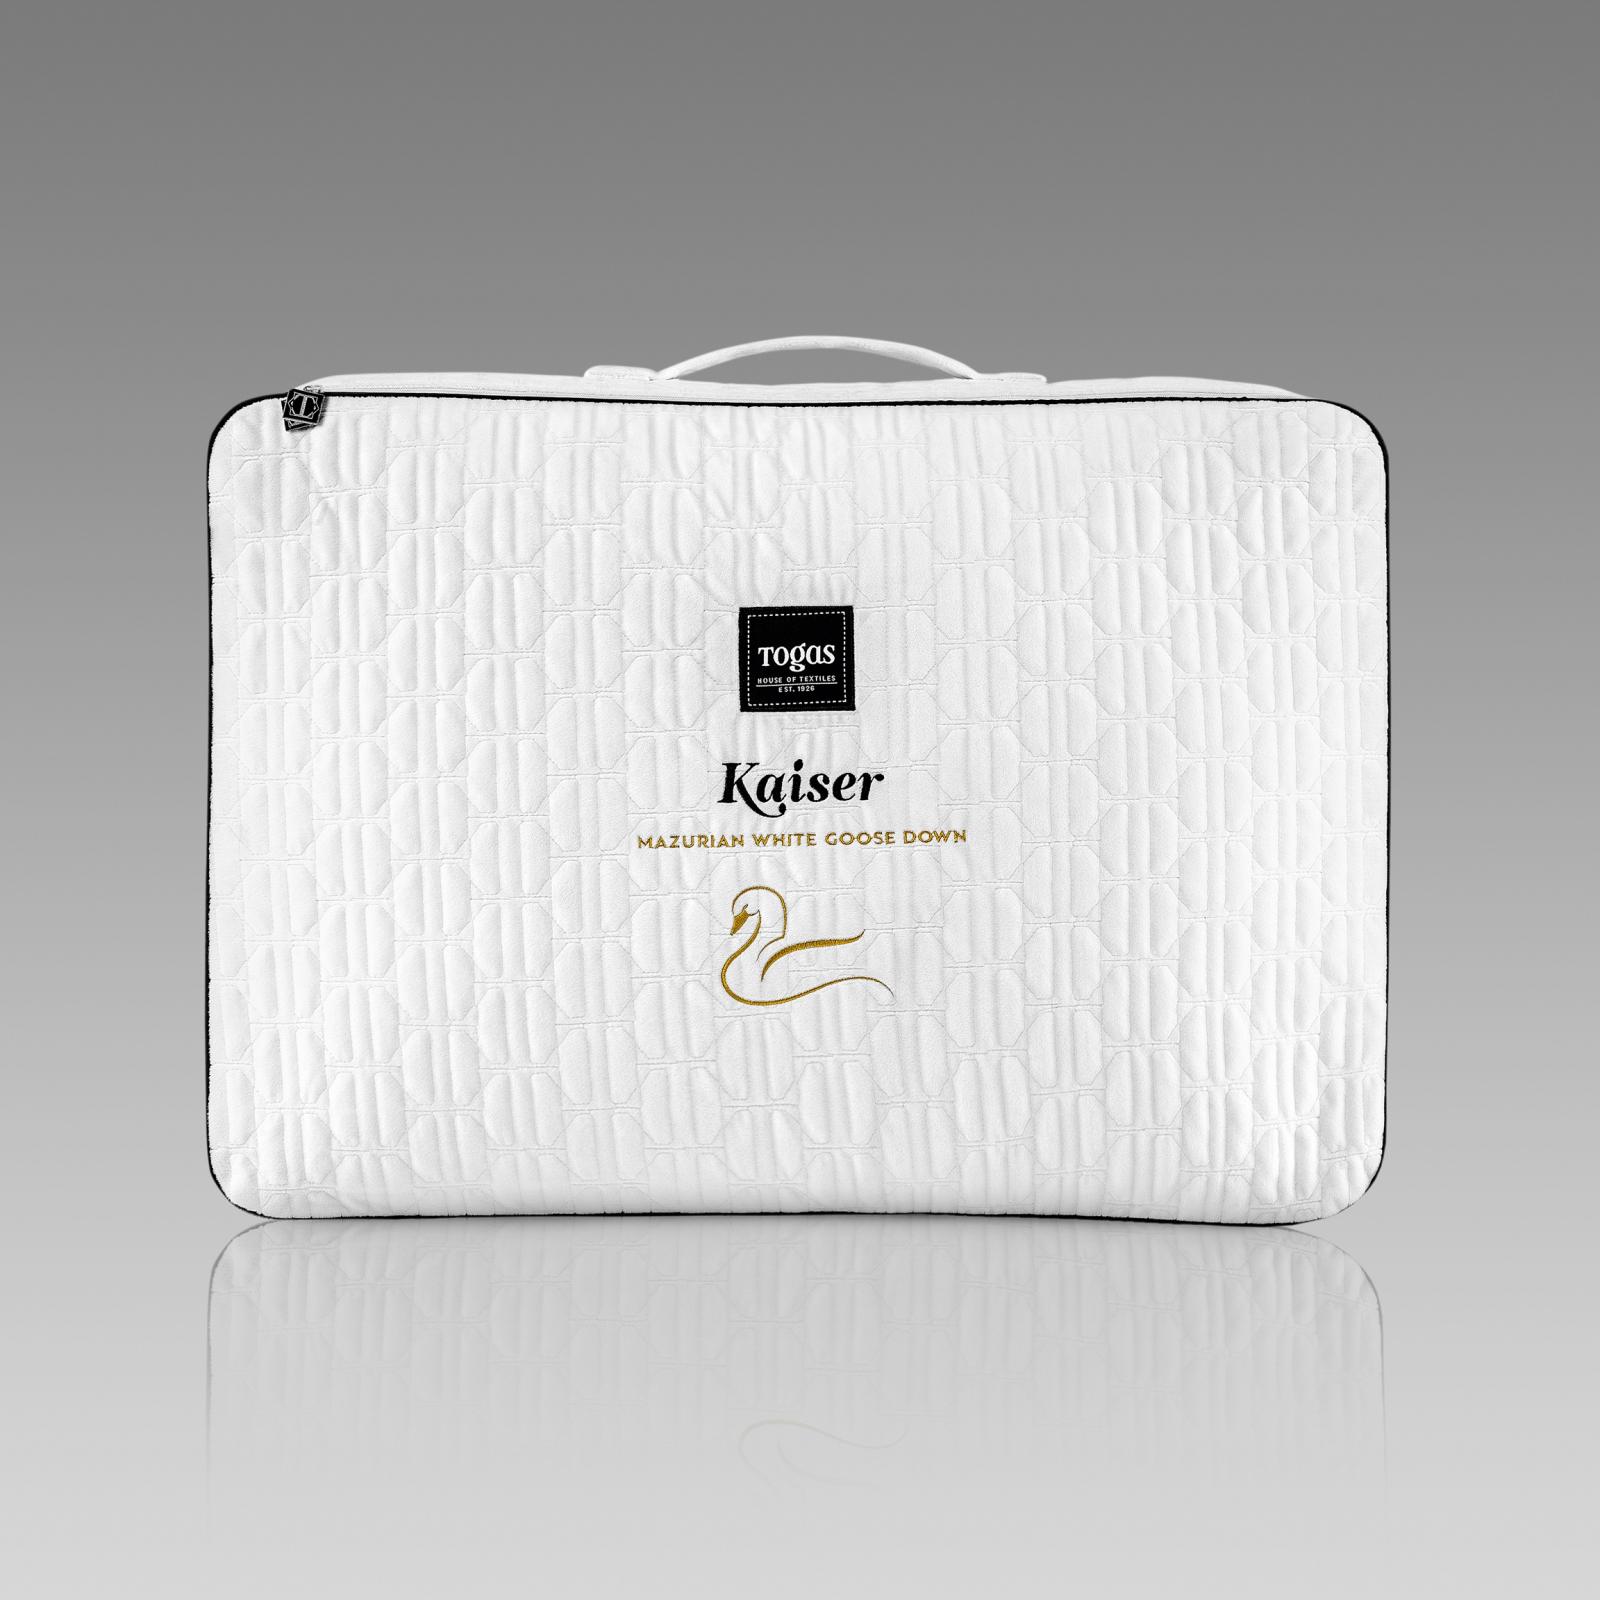 Одеяло Кайзер (20.04.13.0051), цвет белый, размер 200х210 см - фото 5